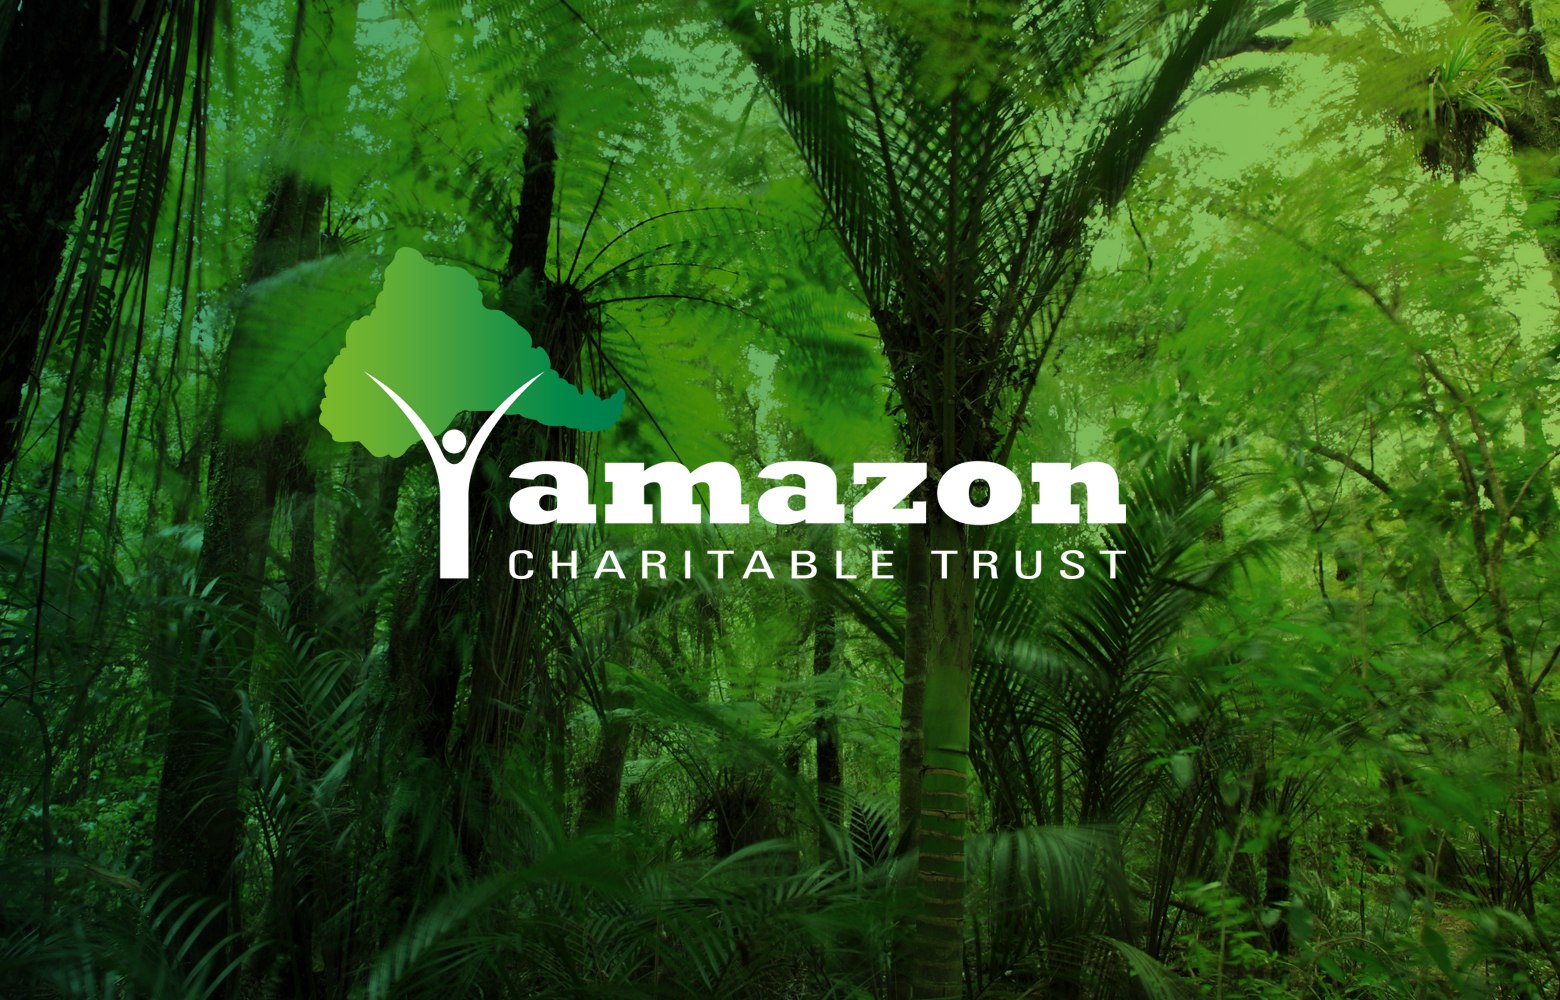 Revisiting Xixuaú; reinvigorating Amazon Charitable Trust